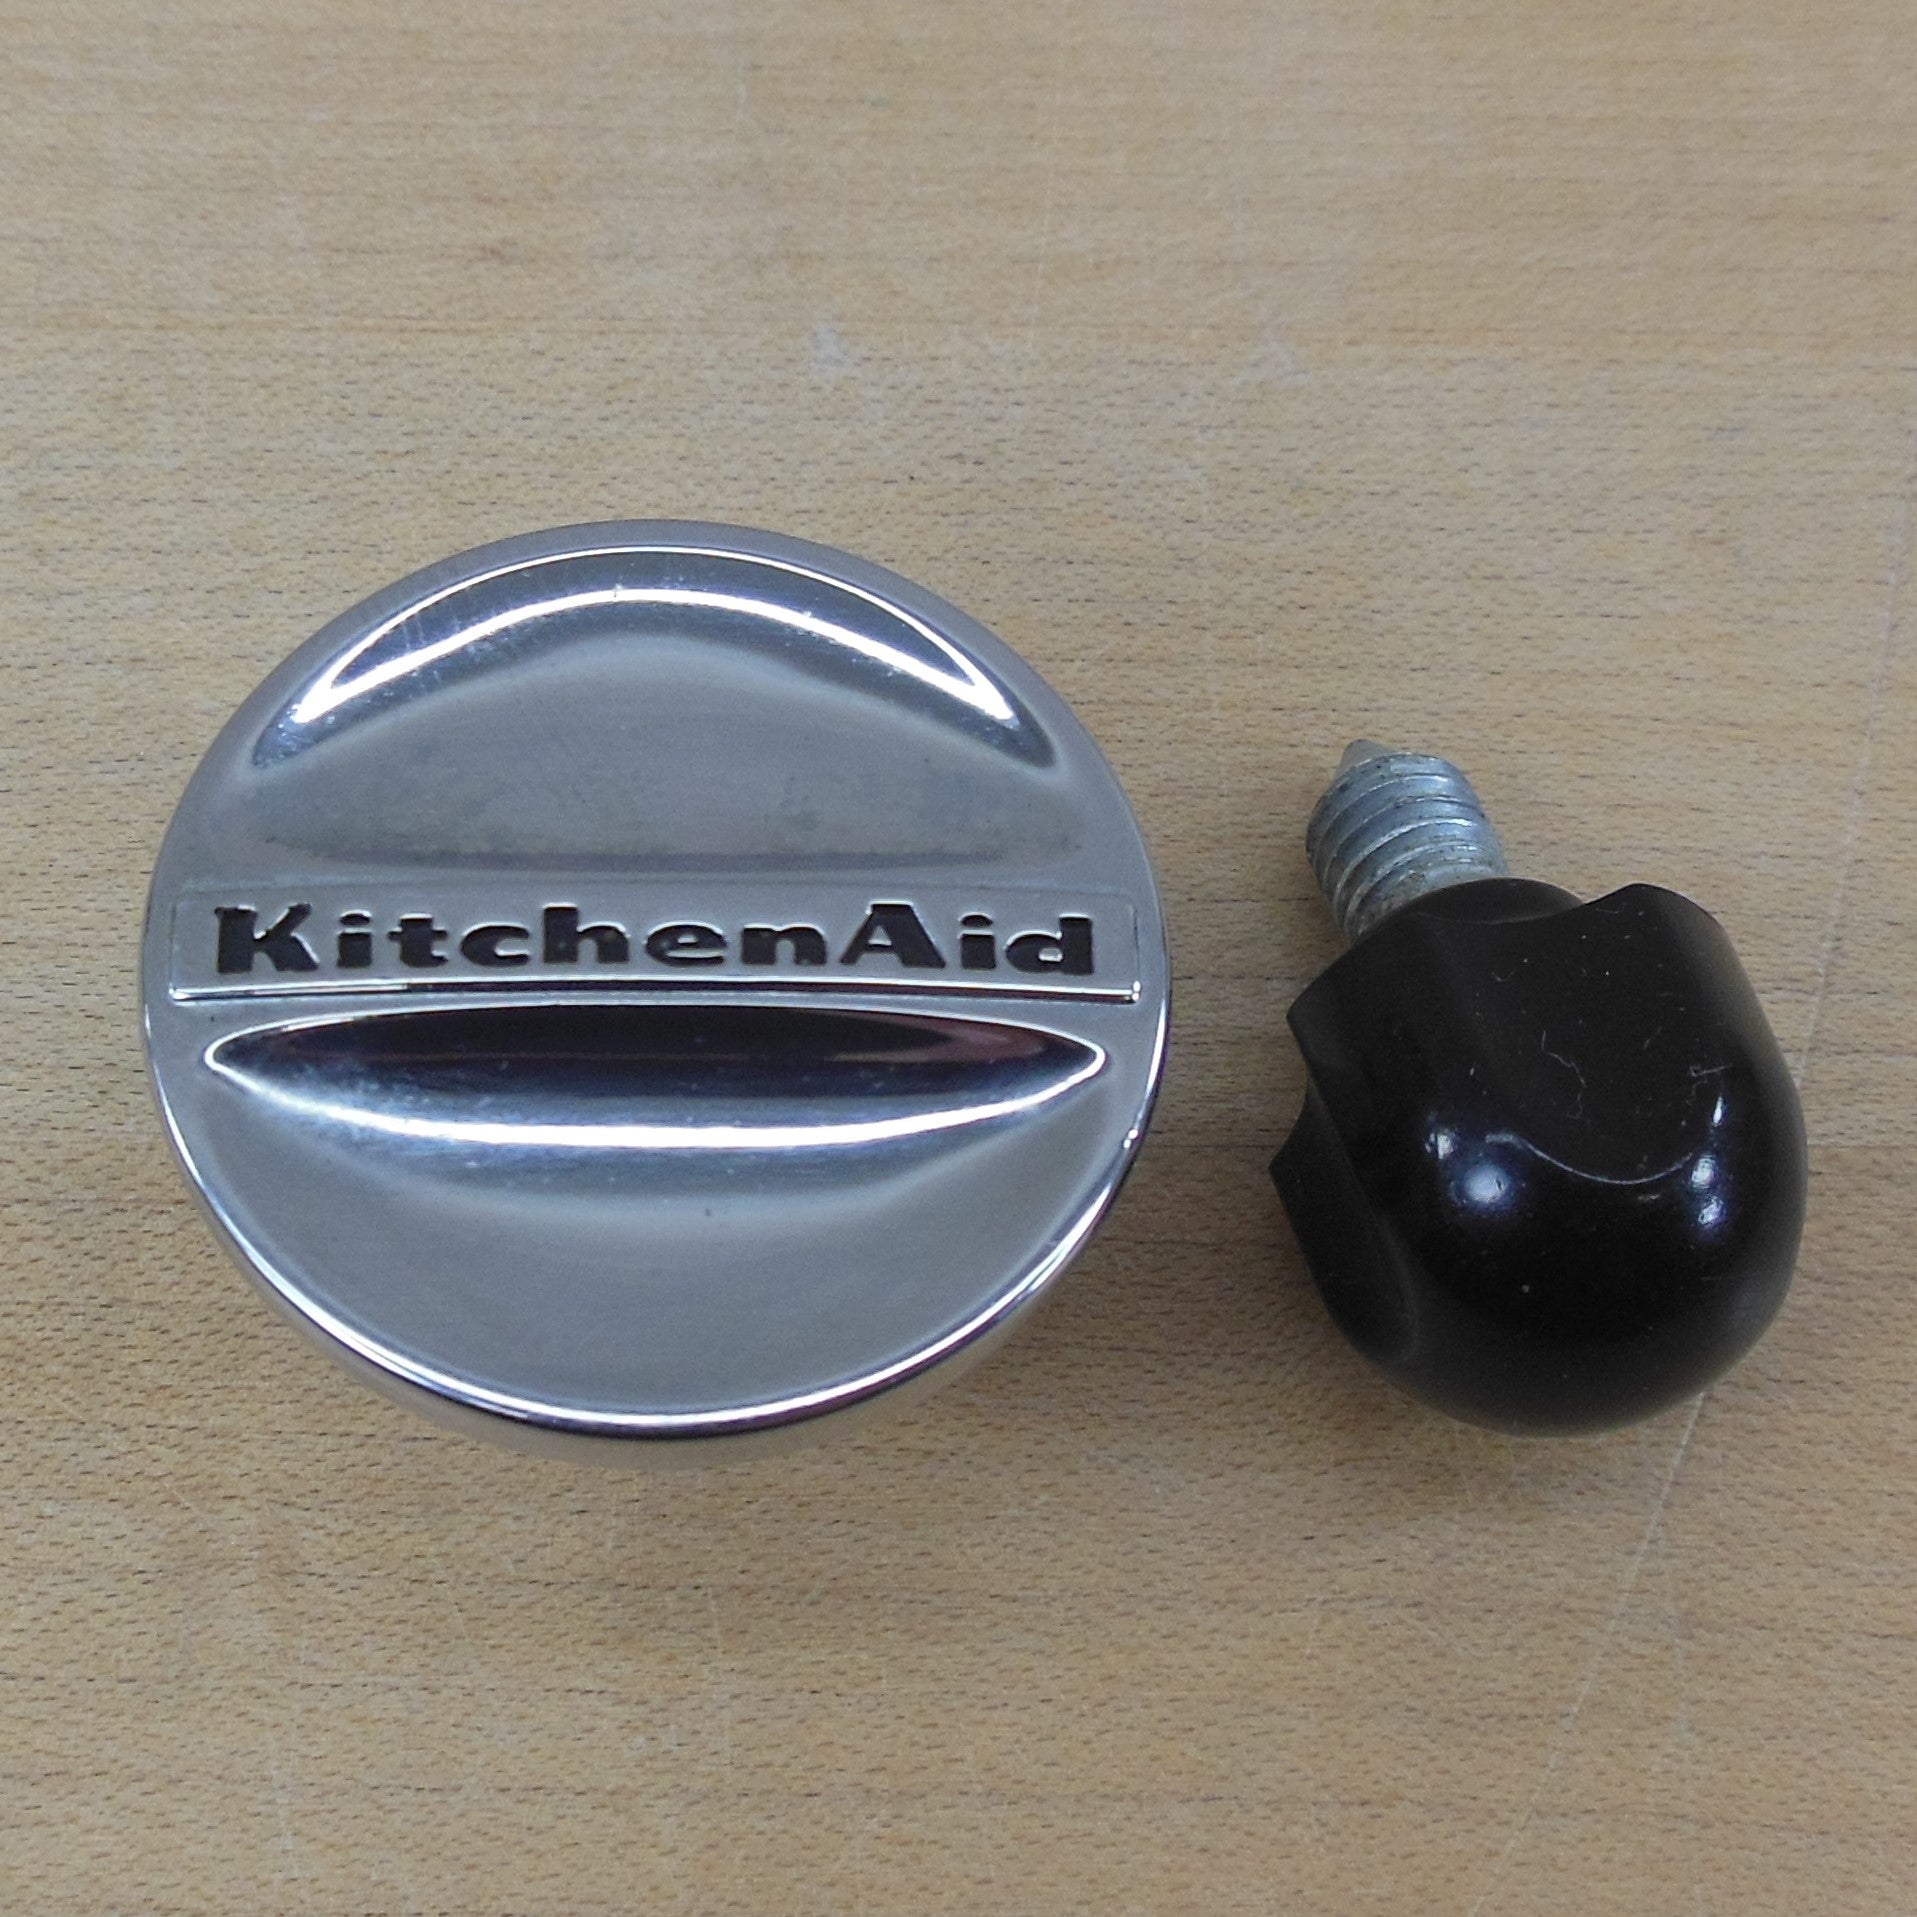 KitchenAid KSM90 Stand Mixer Replacement Part - Attachment Hub